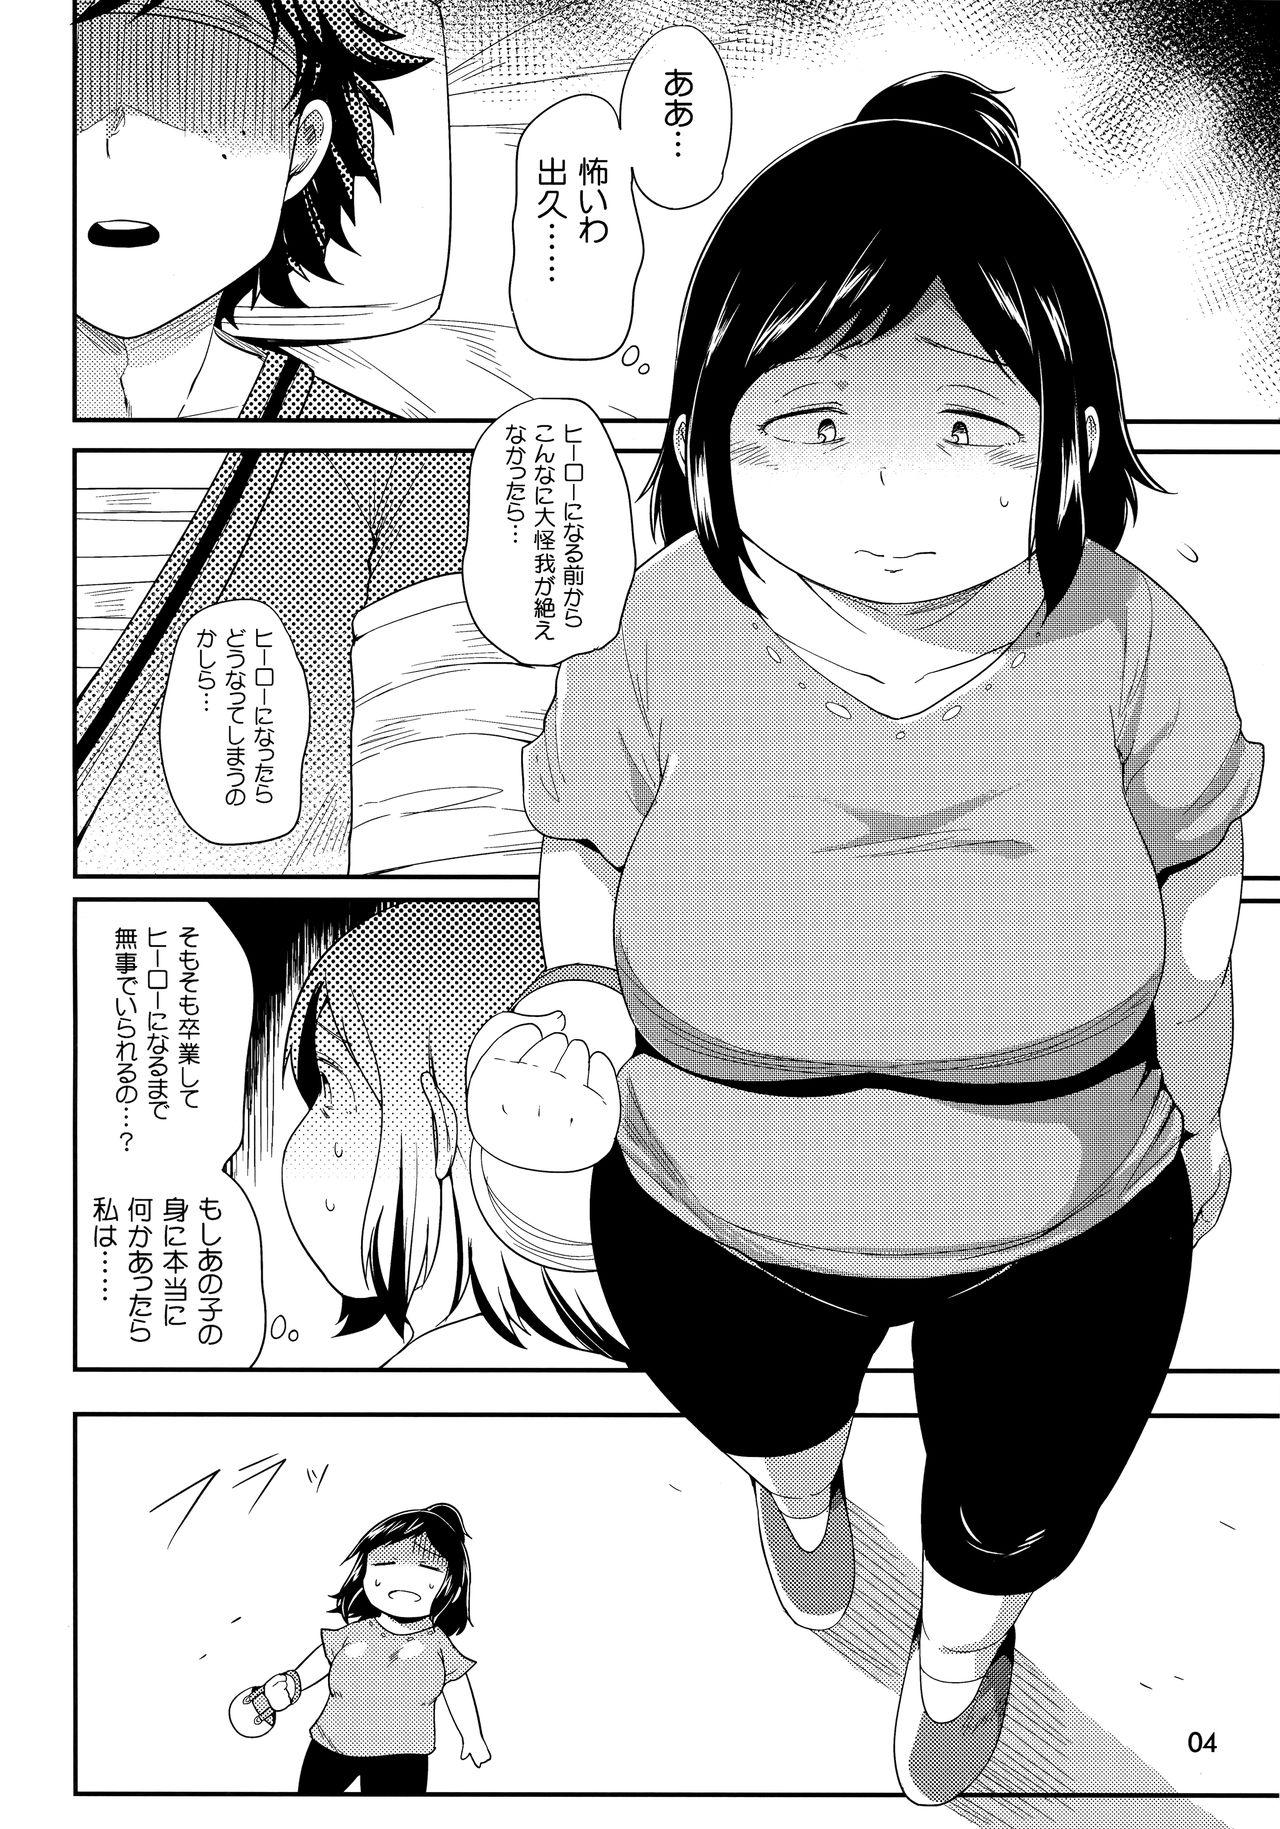 Large Hero no Okaa-san - My hero academia Cachonda - Page 3